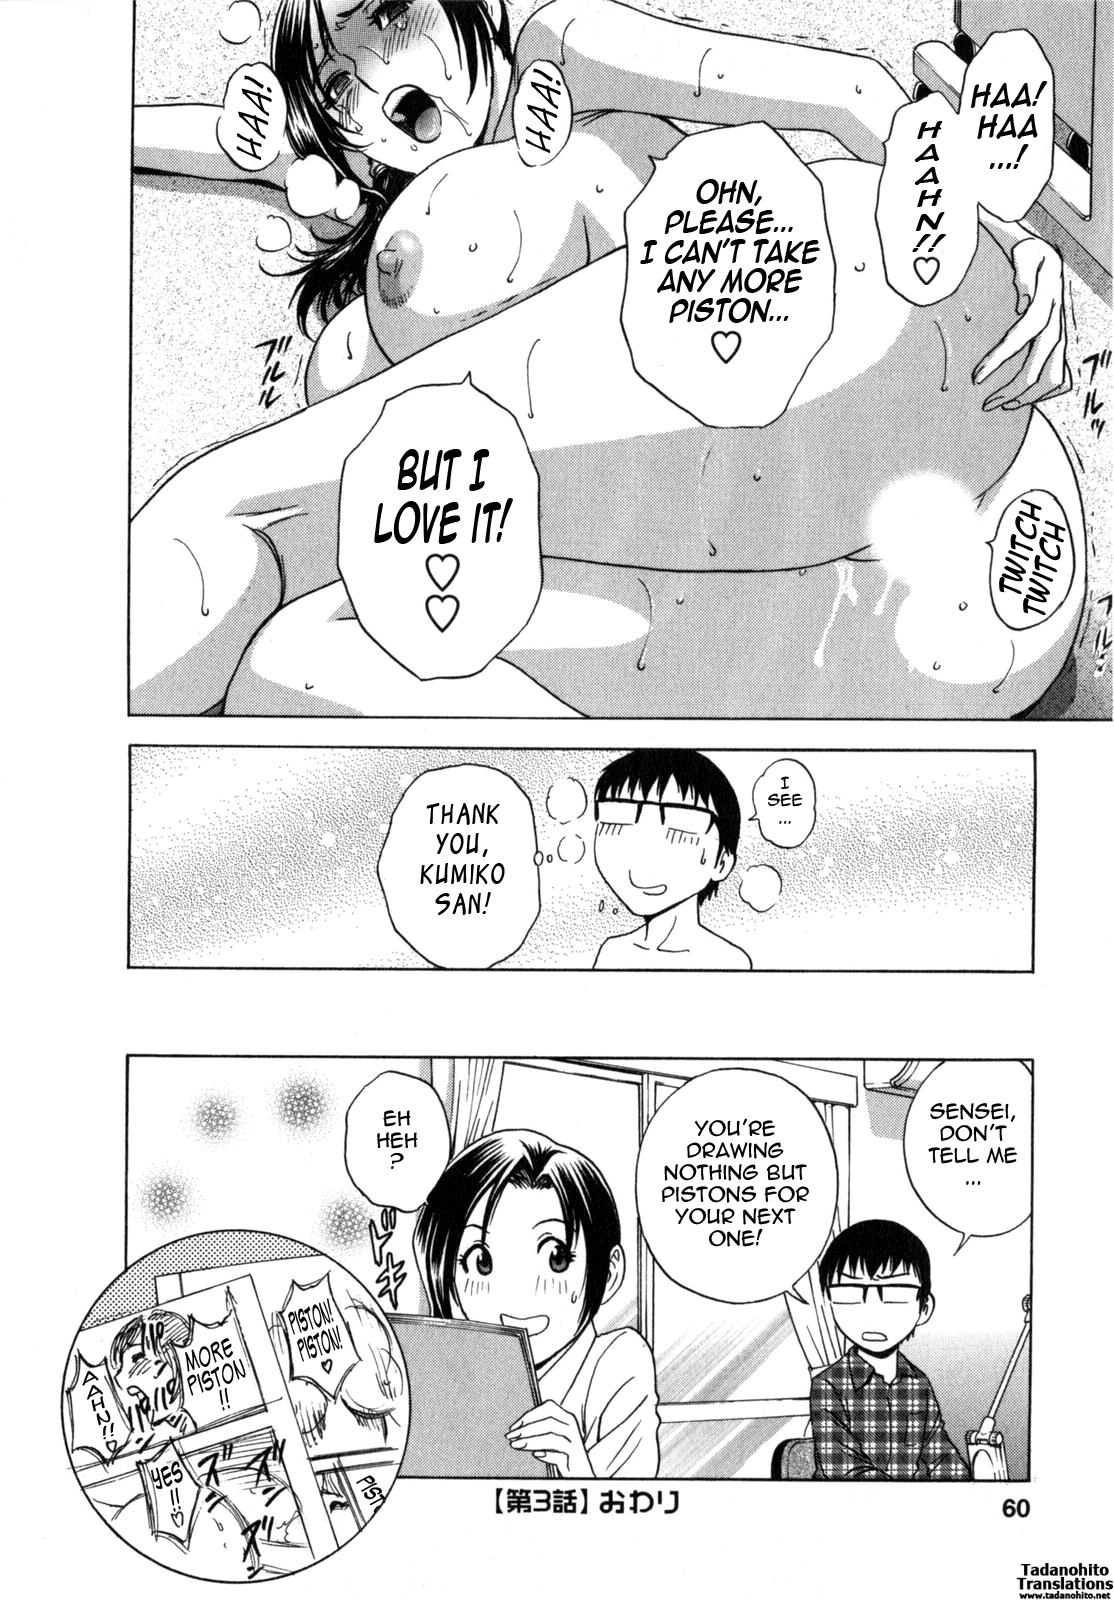 [Hidemaru] Life with Married Women Just Like a Manga 1 - Ch. 1-5 [English] {Tadanohito} 62